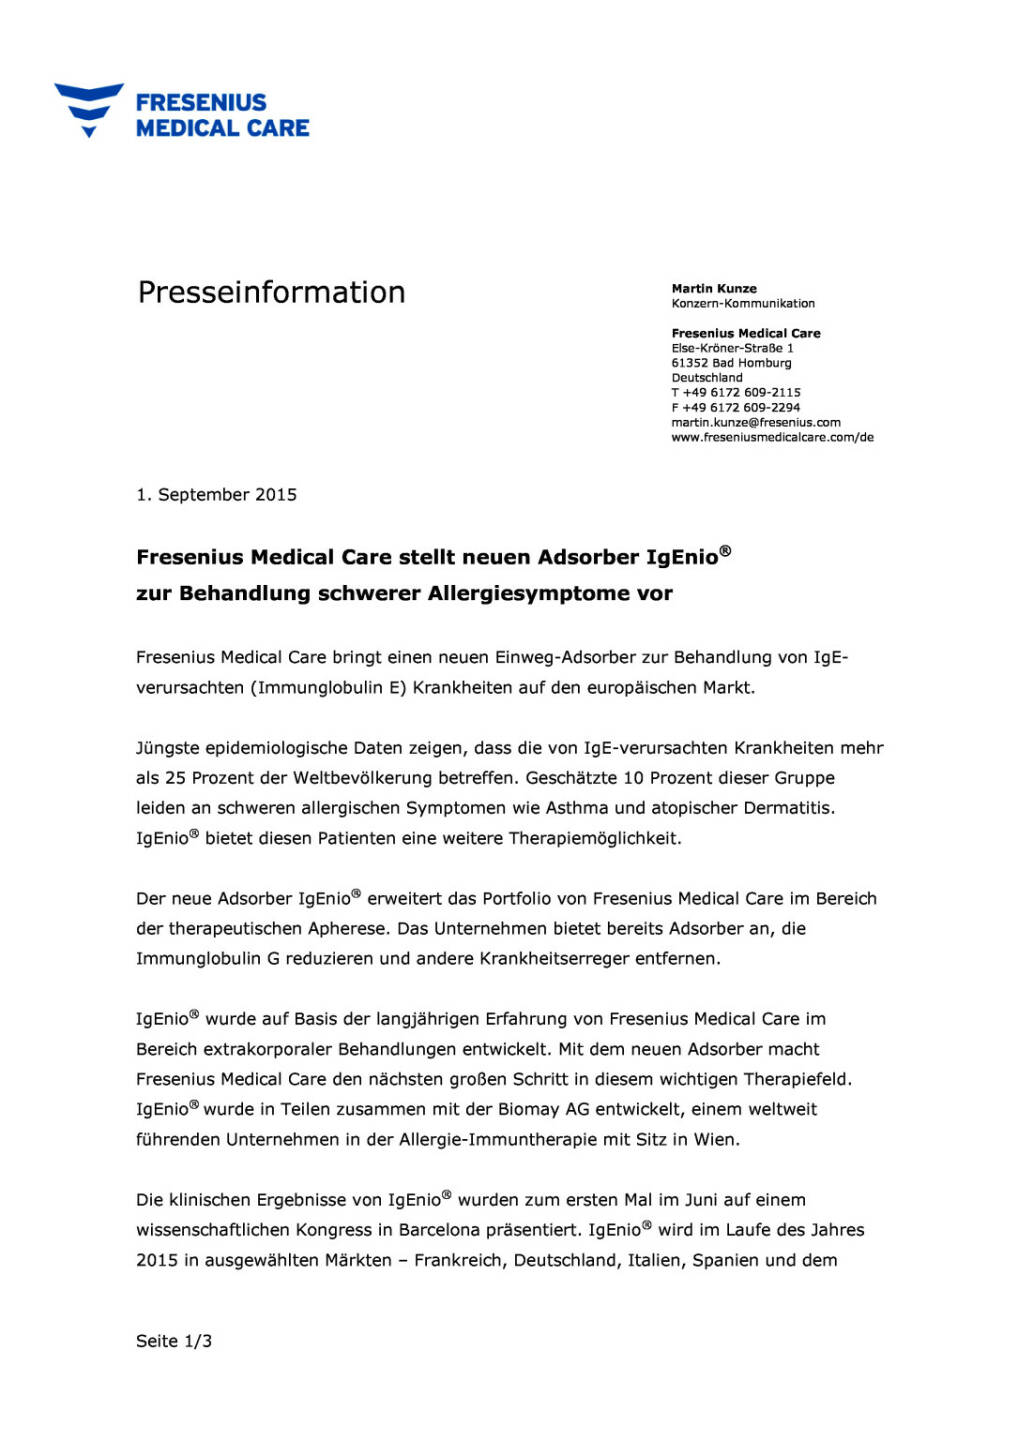 Fresenius Medical Care: neuer Adsorber gegen Allergiesymptome , Seite 1/3, komplettes Dokument unter http://boerse-social.com/static/uploads/file_341_fresenius_medical_care_neuer_adsorber_gegen_allergiesymptome.pdf